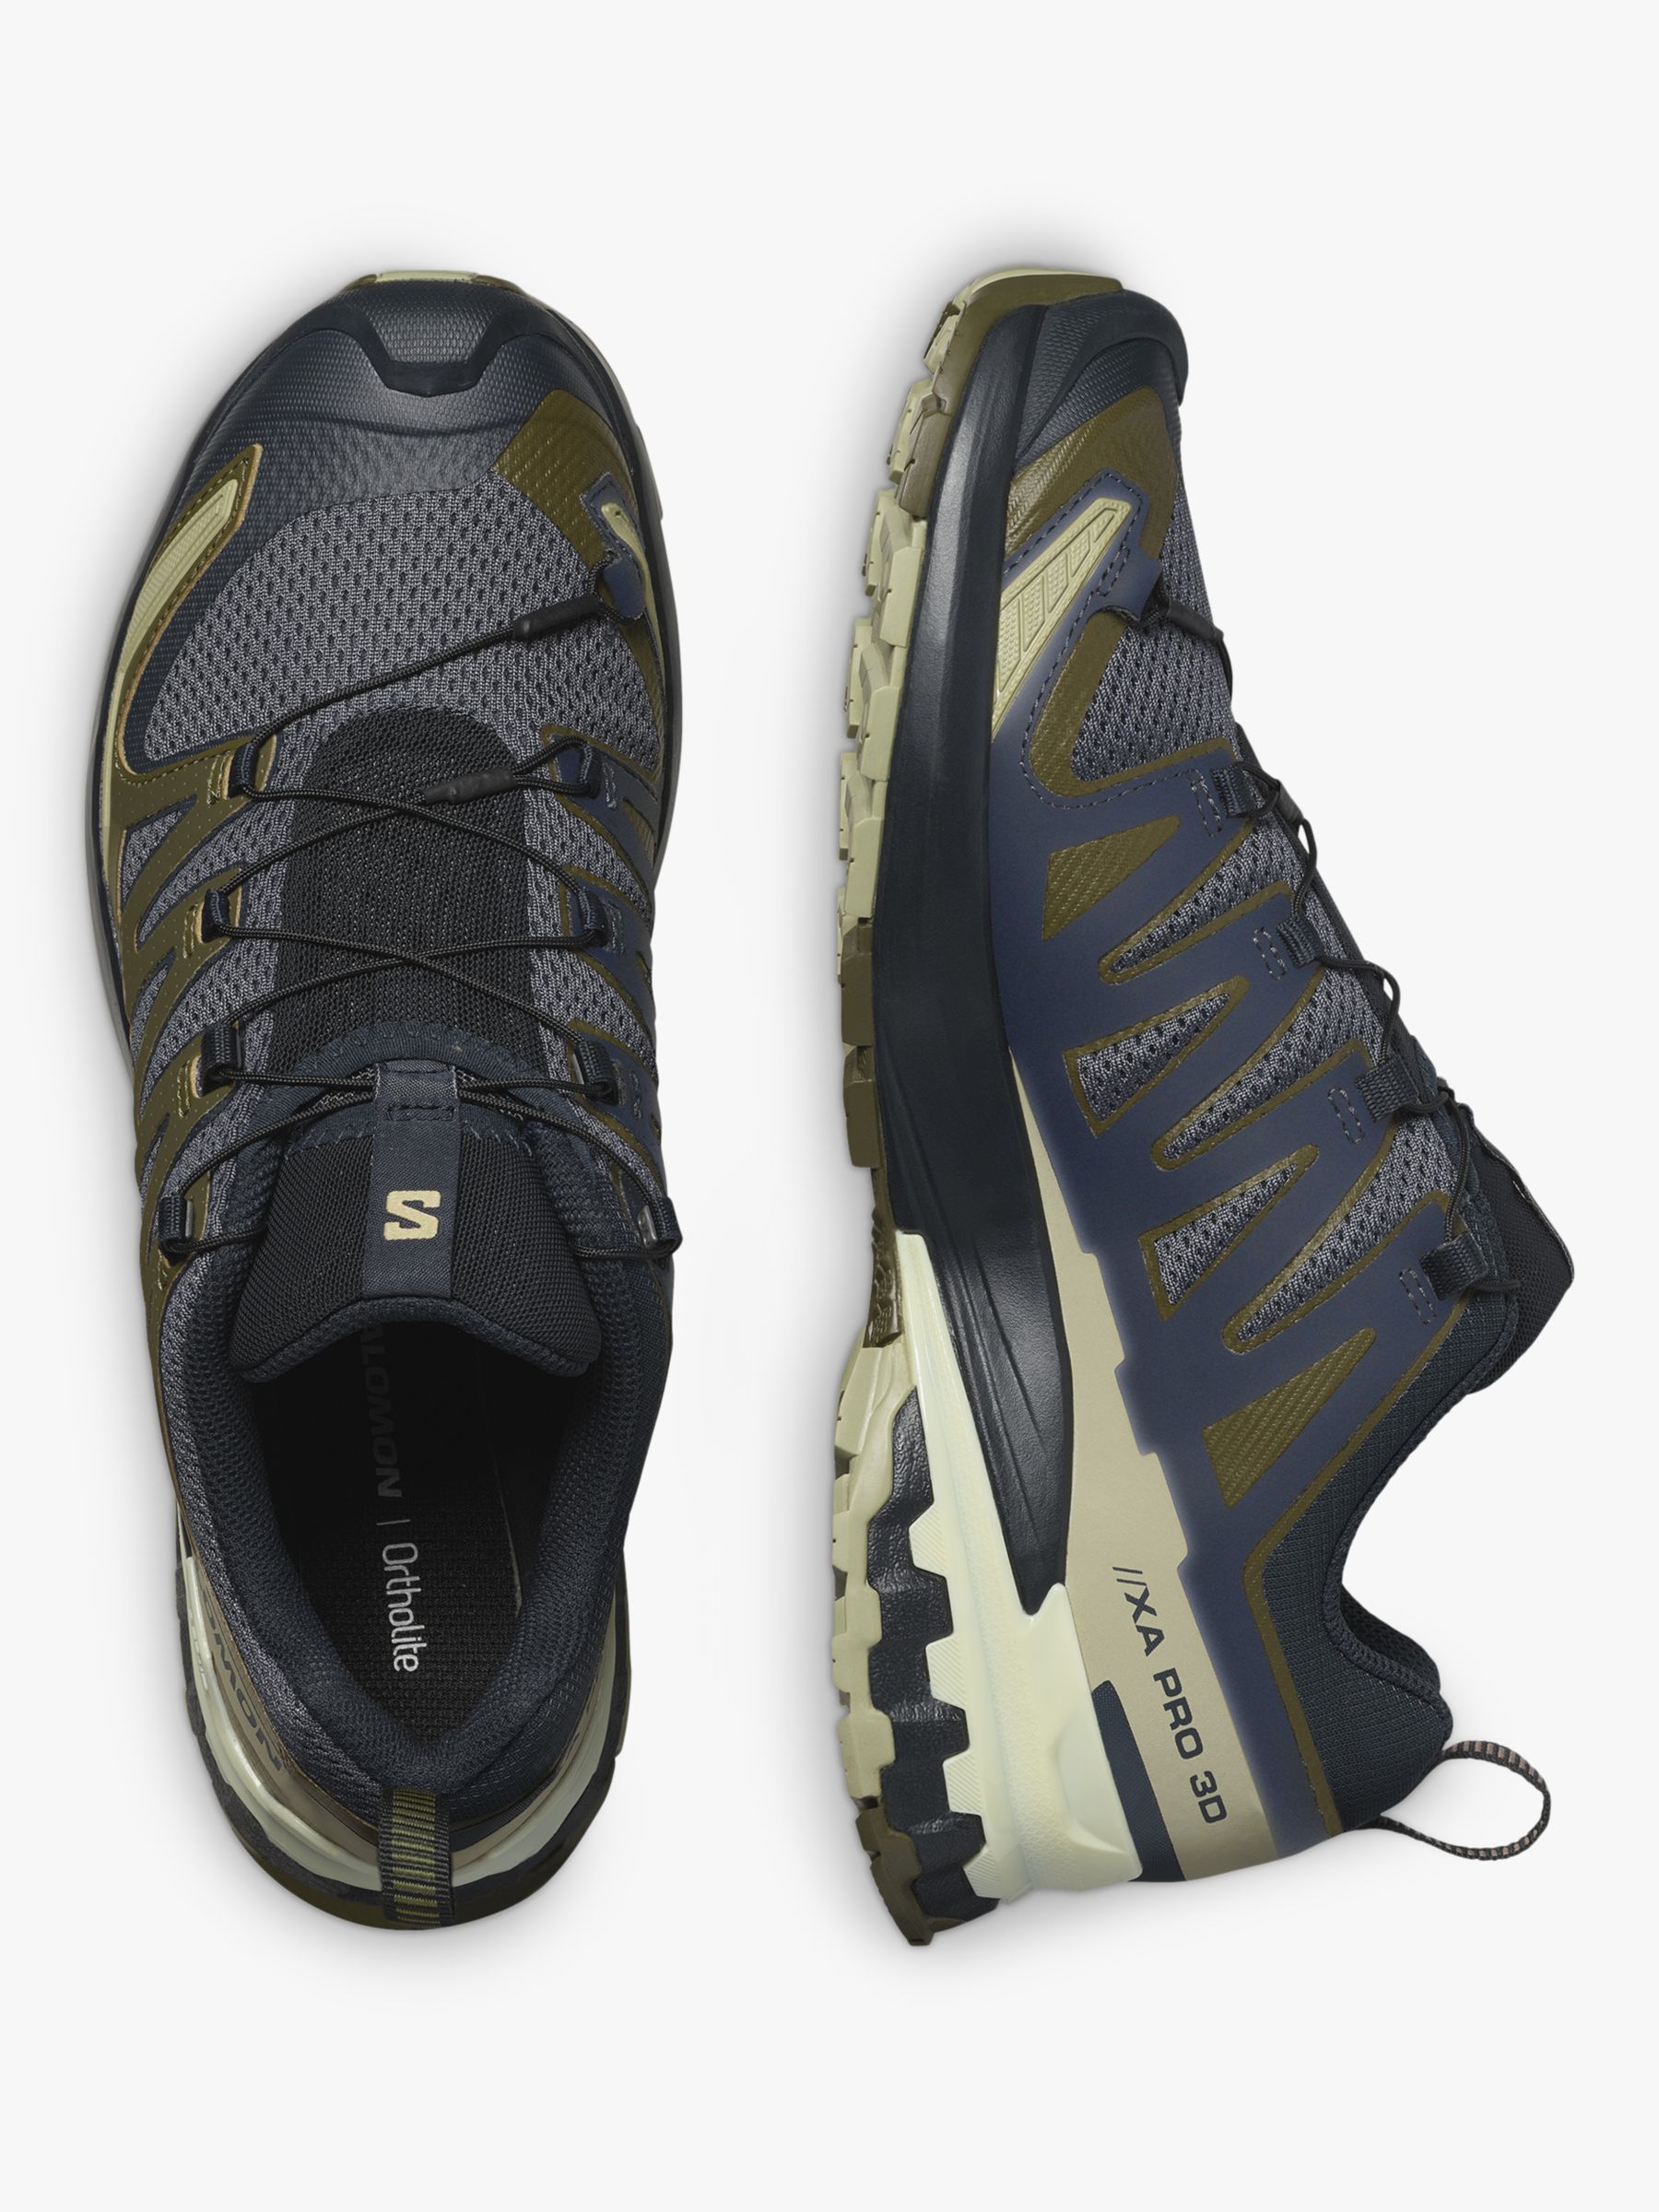 Salomon XA Pro 3D V9 Men's Running Trail Shoes, India Ink/Olive, 7